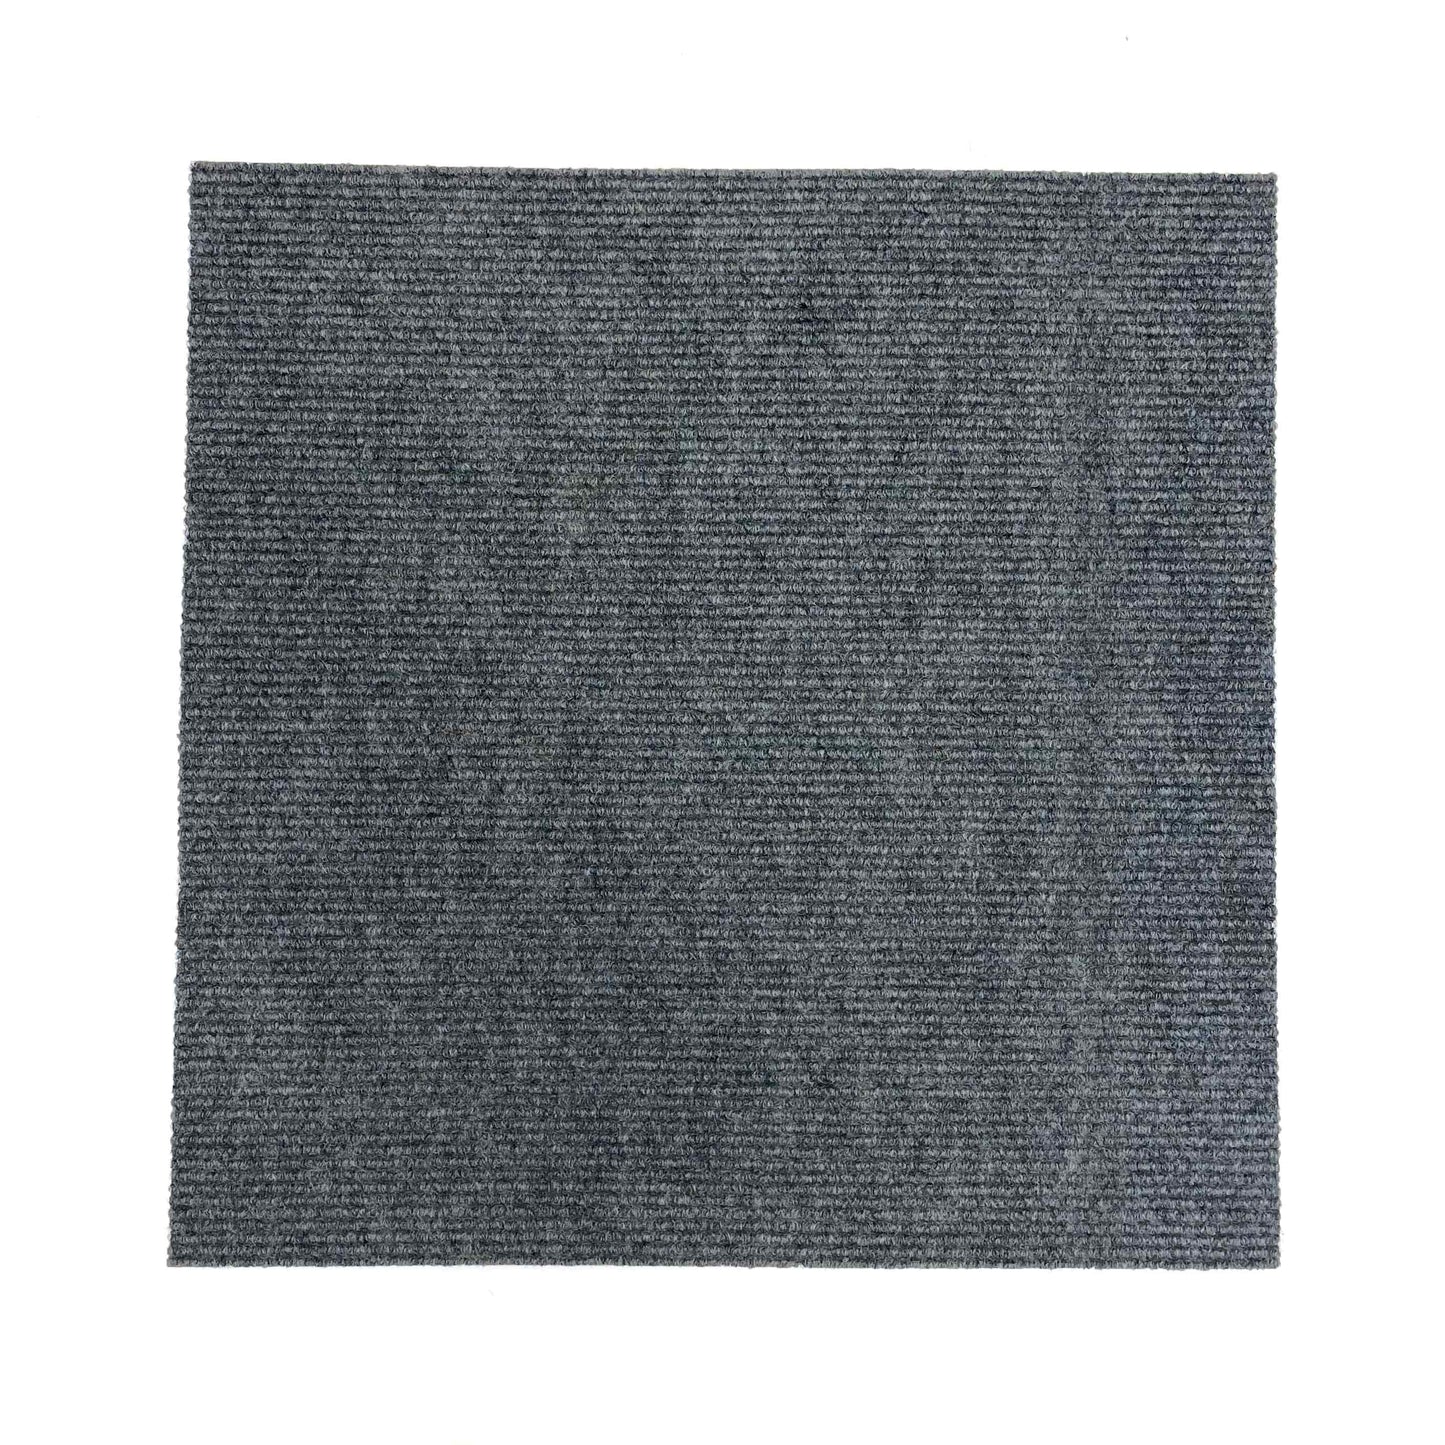 Mid Grey Ribbed Carpet Tiles